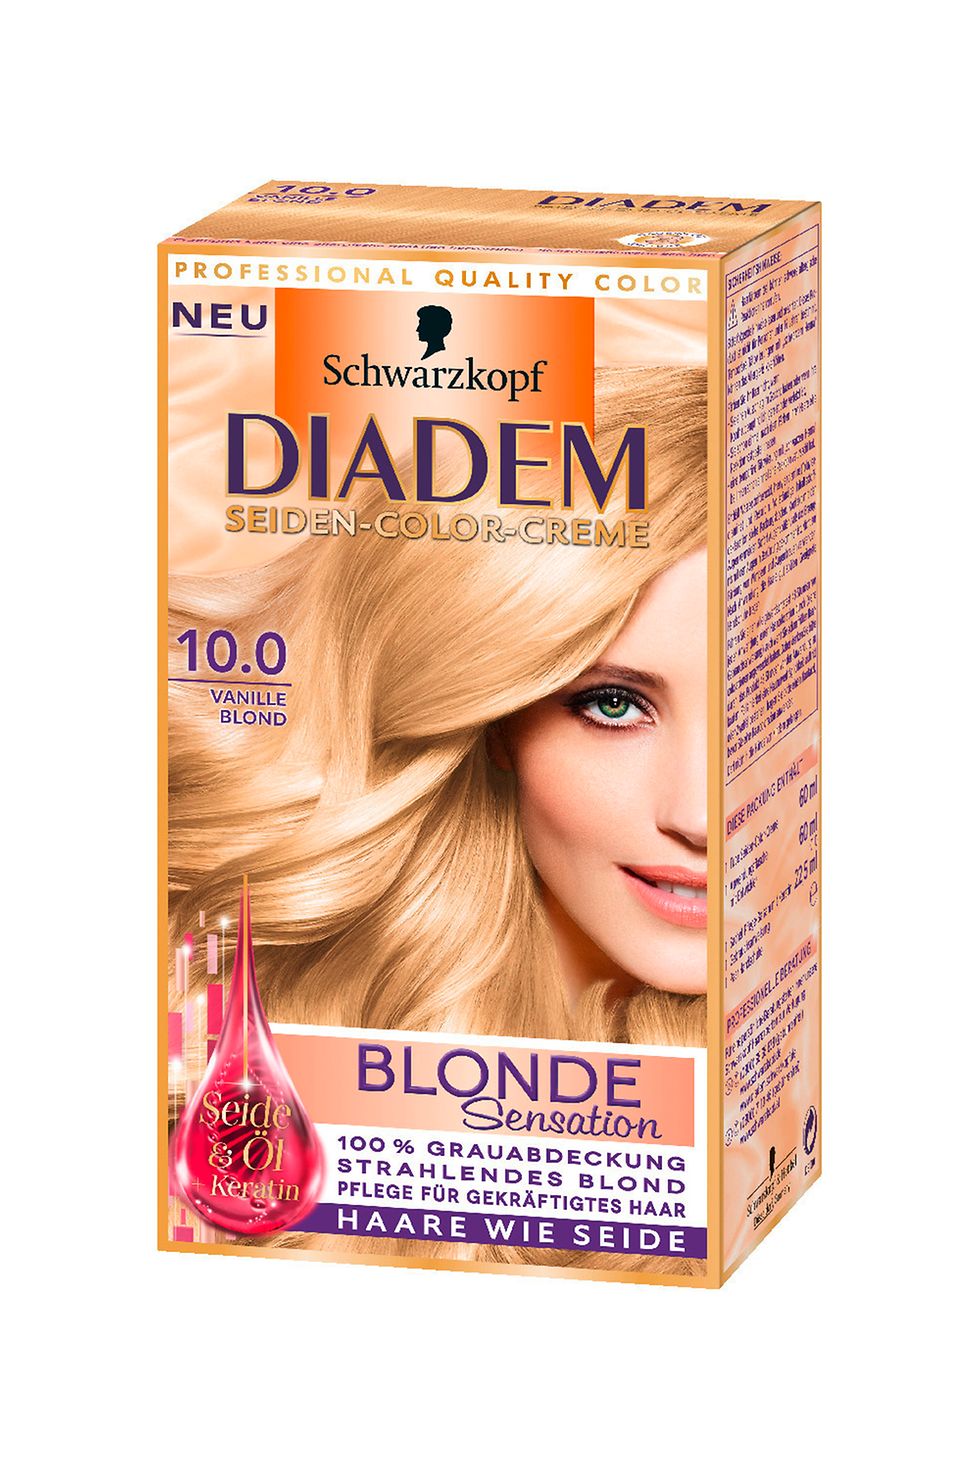 Diadem Seiden-Color-Creme Blonde Sensation 10.0 Vanille Blond